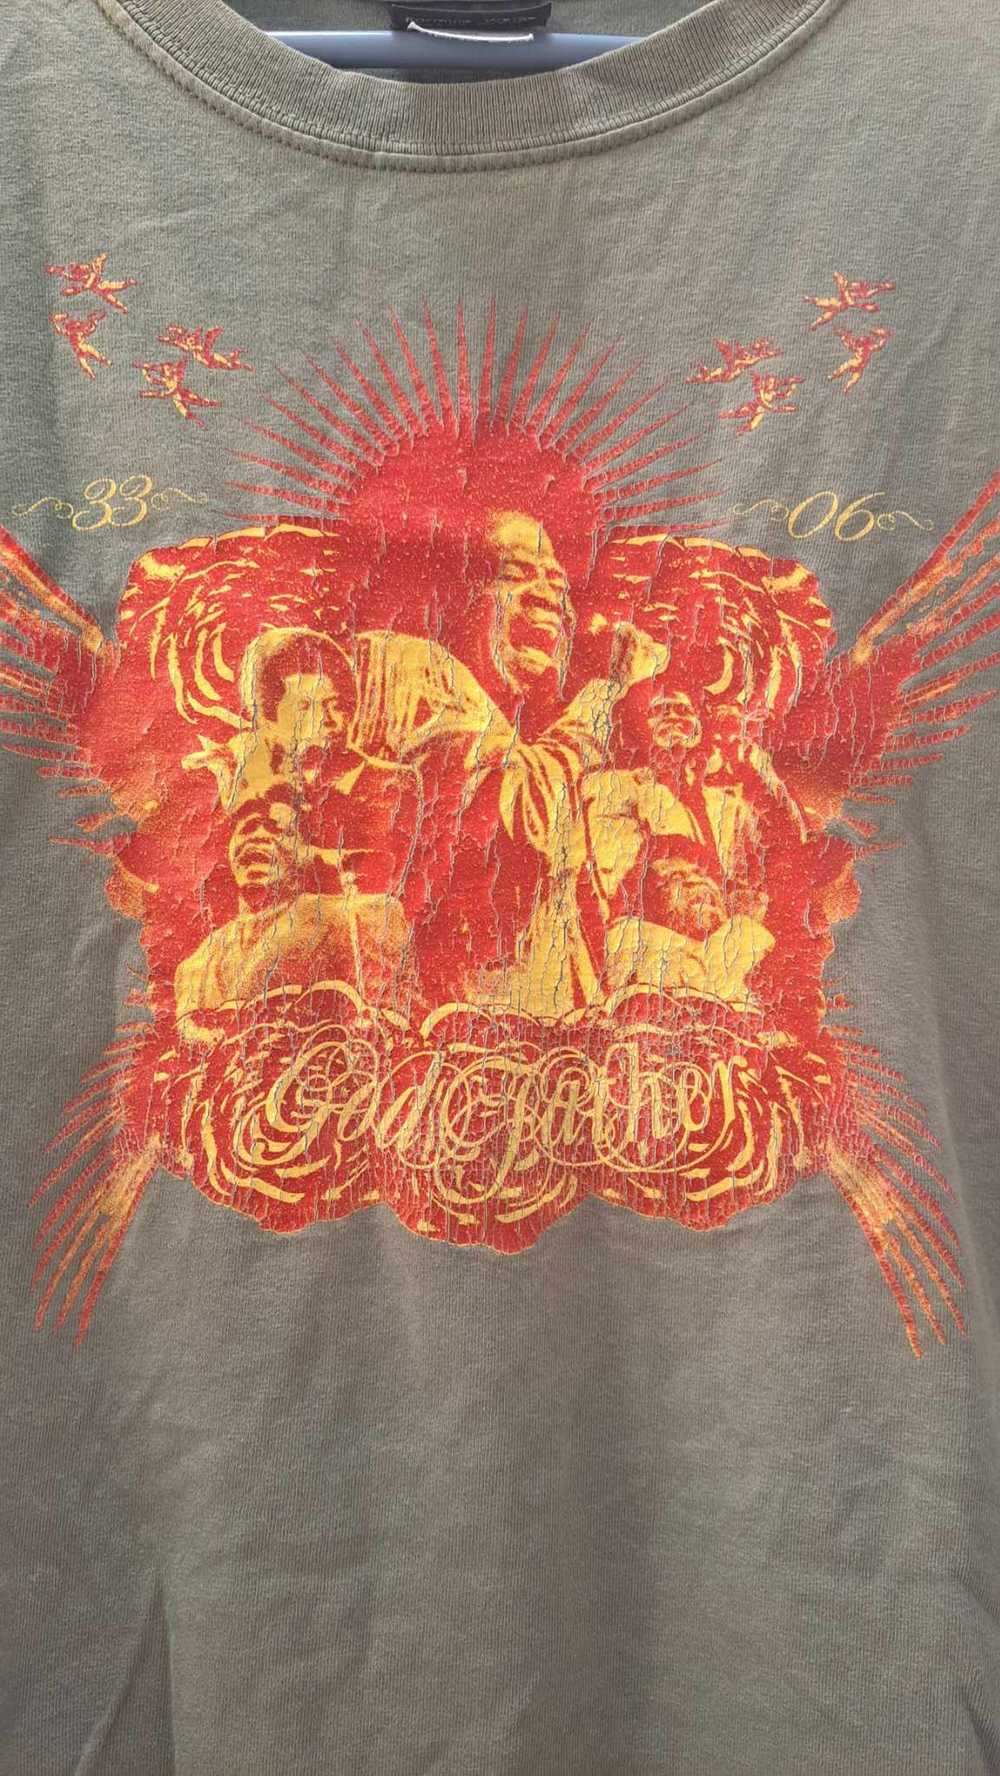 Other James Brown HVW8 Artwork XXL T-Shirt - image 2